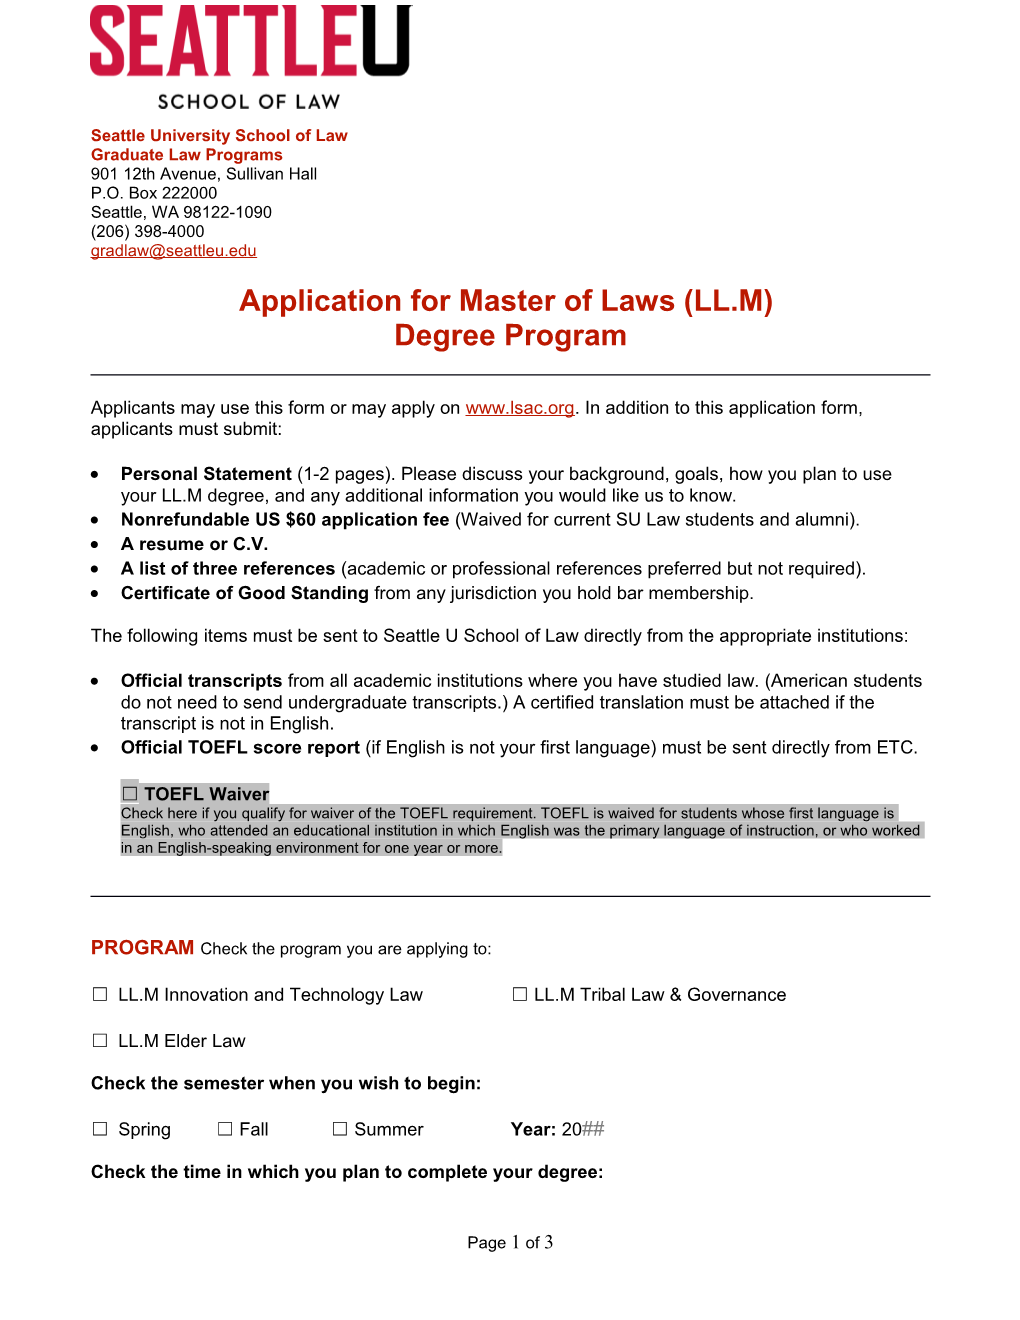 Application for Master of Laws (LL.M) Degree Program